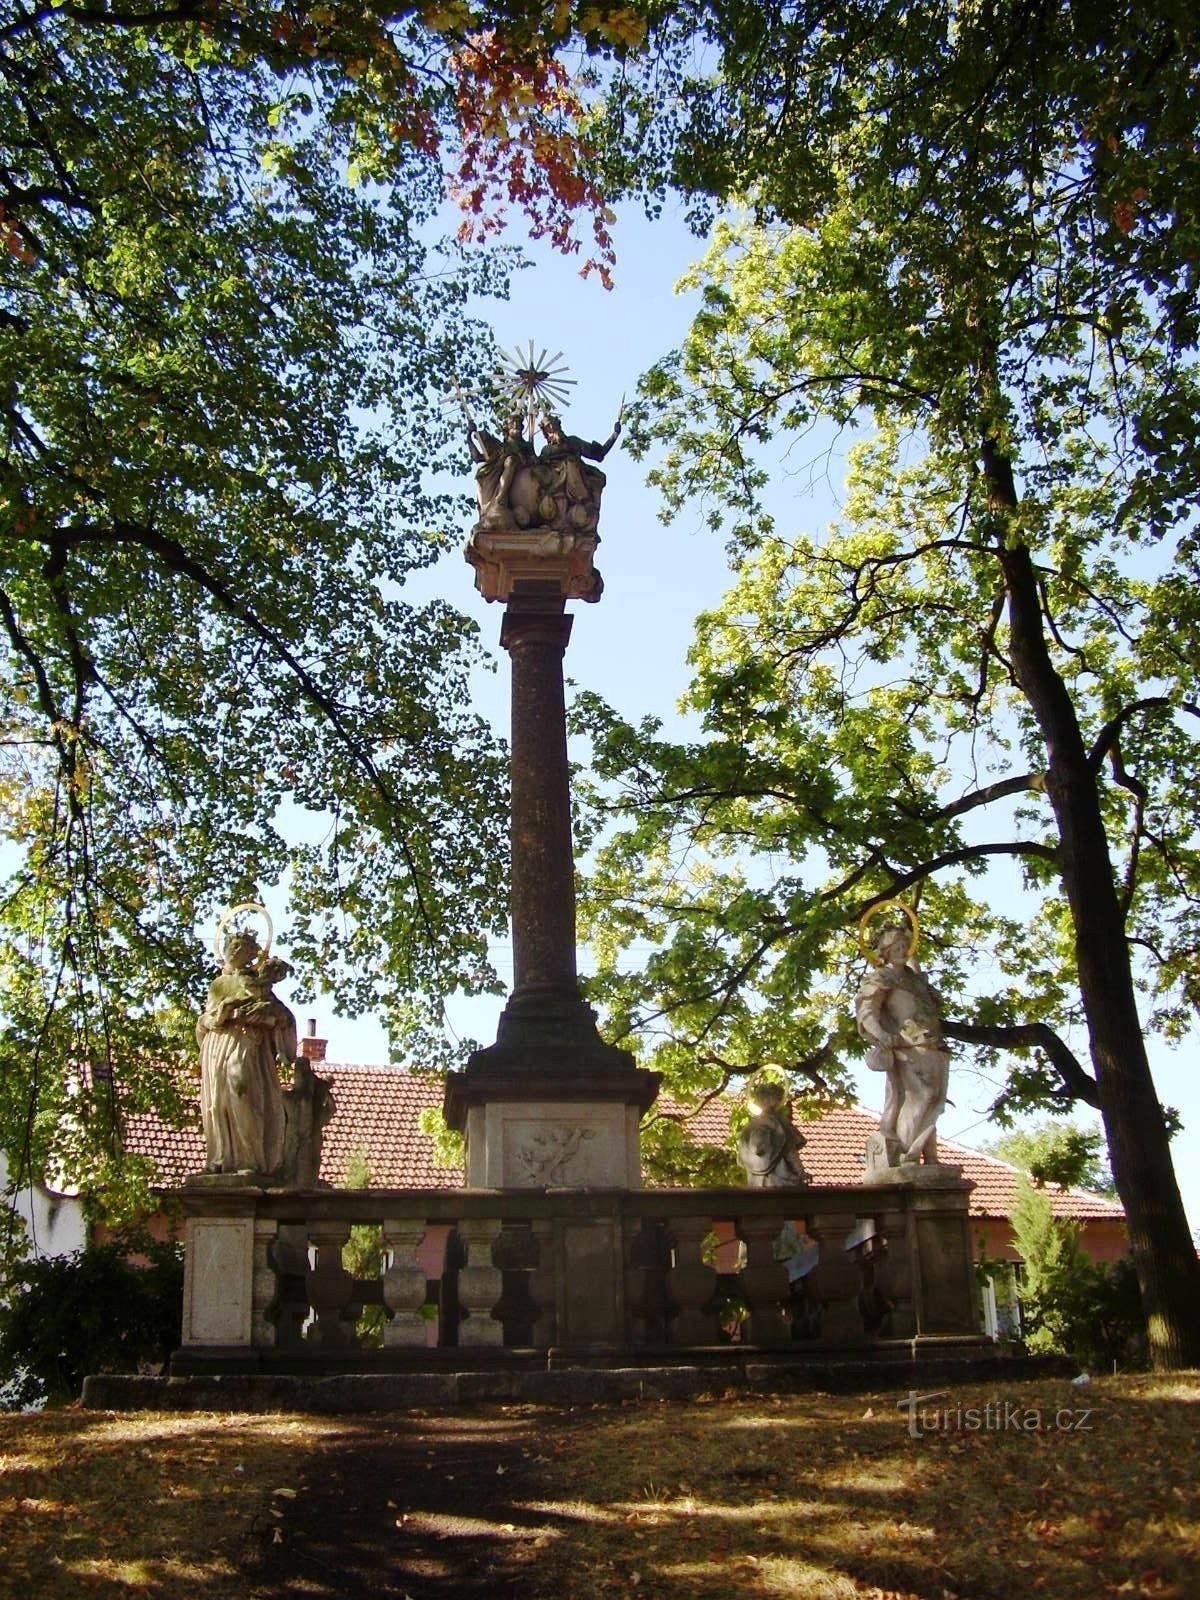 Coluna da Santíssima Trindade em Budišov perto de Třebíč